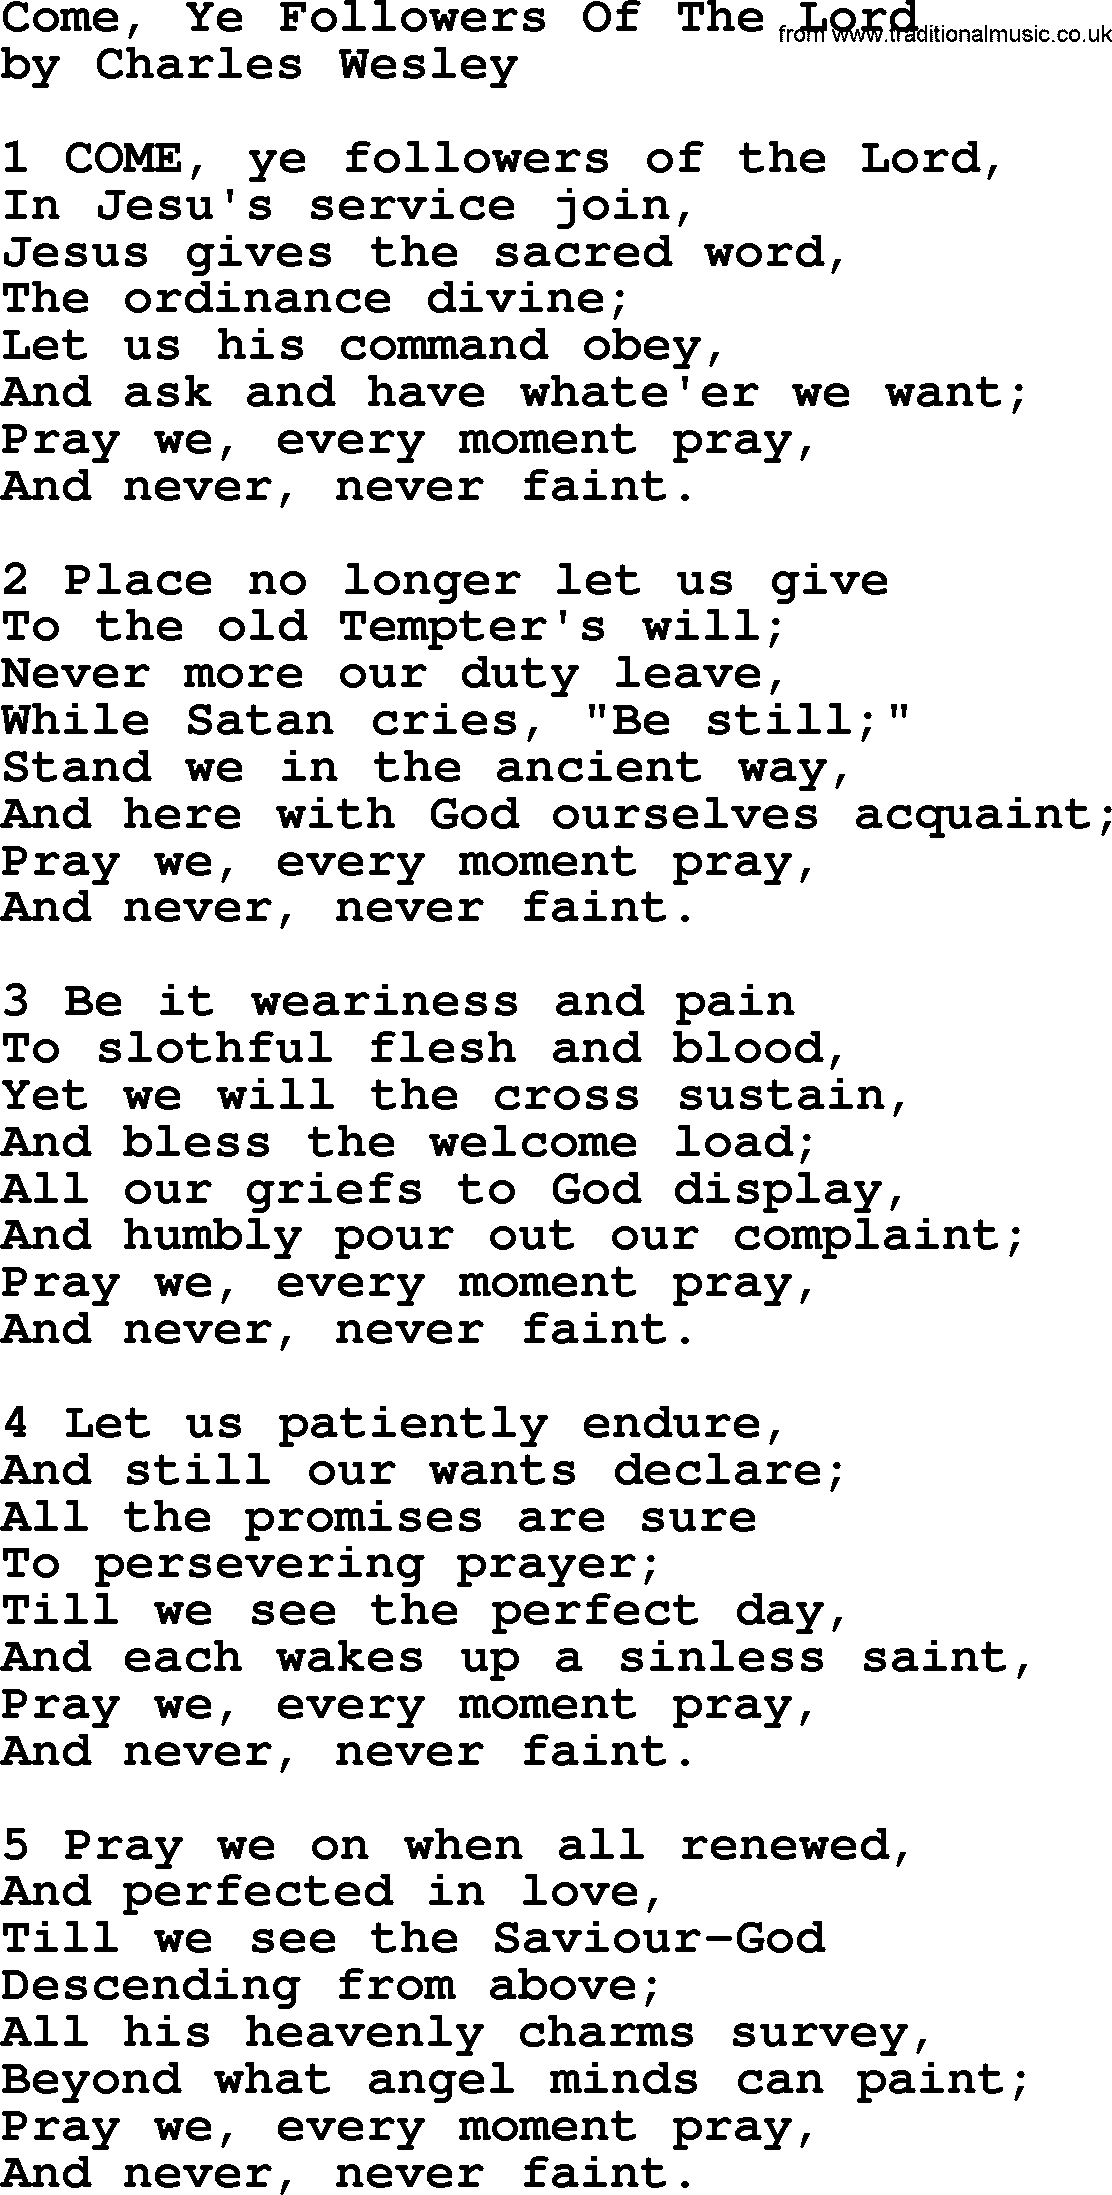 Charles Wesley hymn: Come, Ye Followers Of The Lord, lyrics